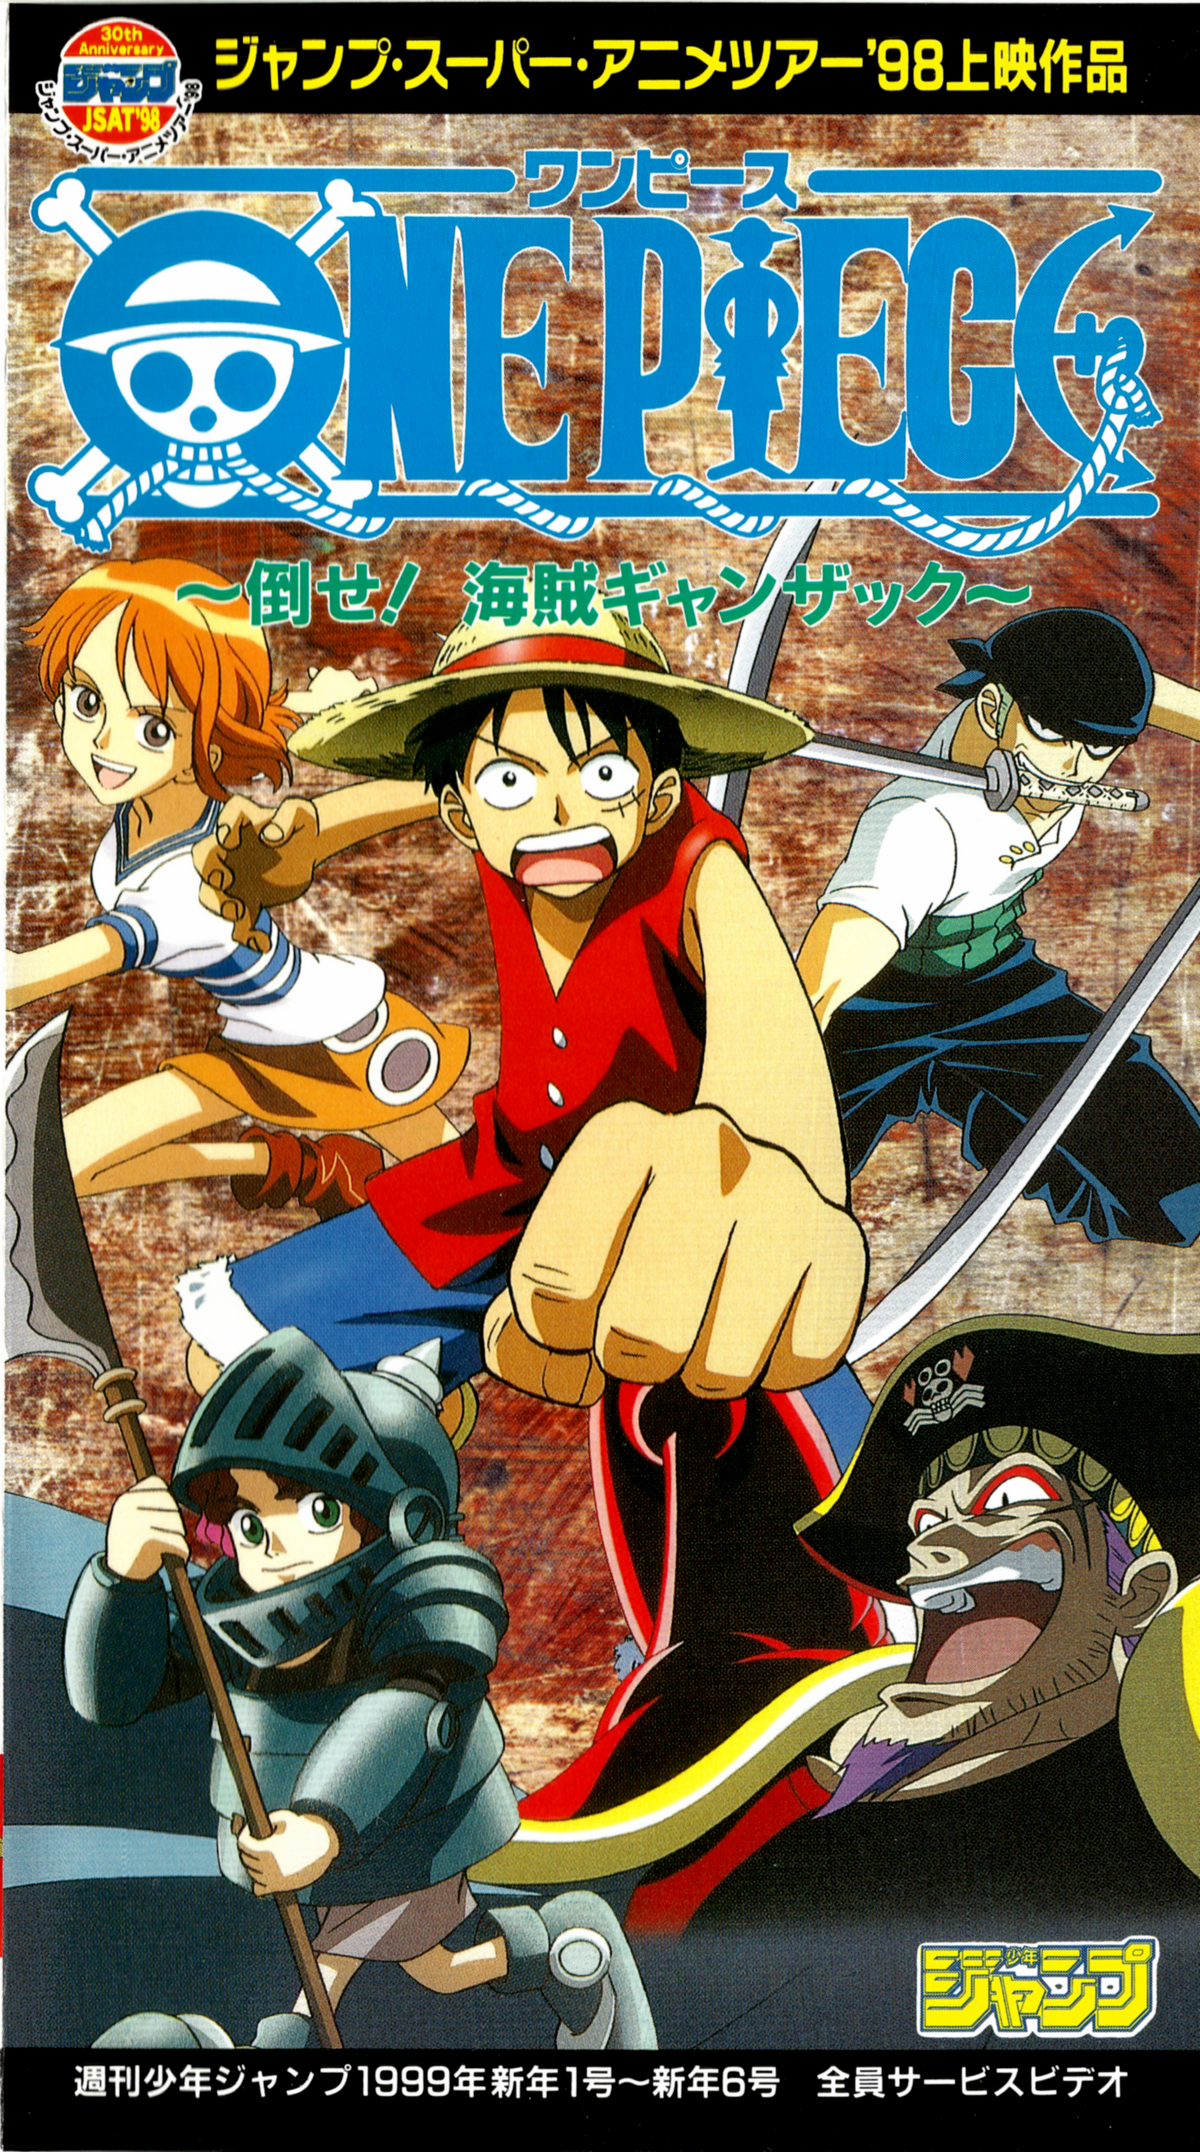 One Piece (TV Series 1999– ) - Soundtracks - IMDb